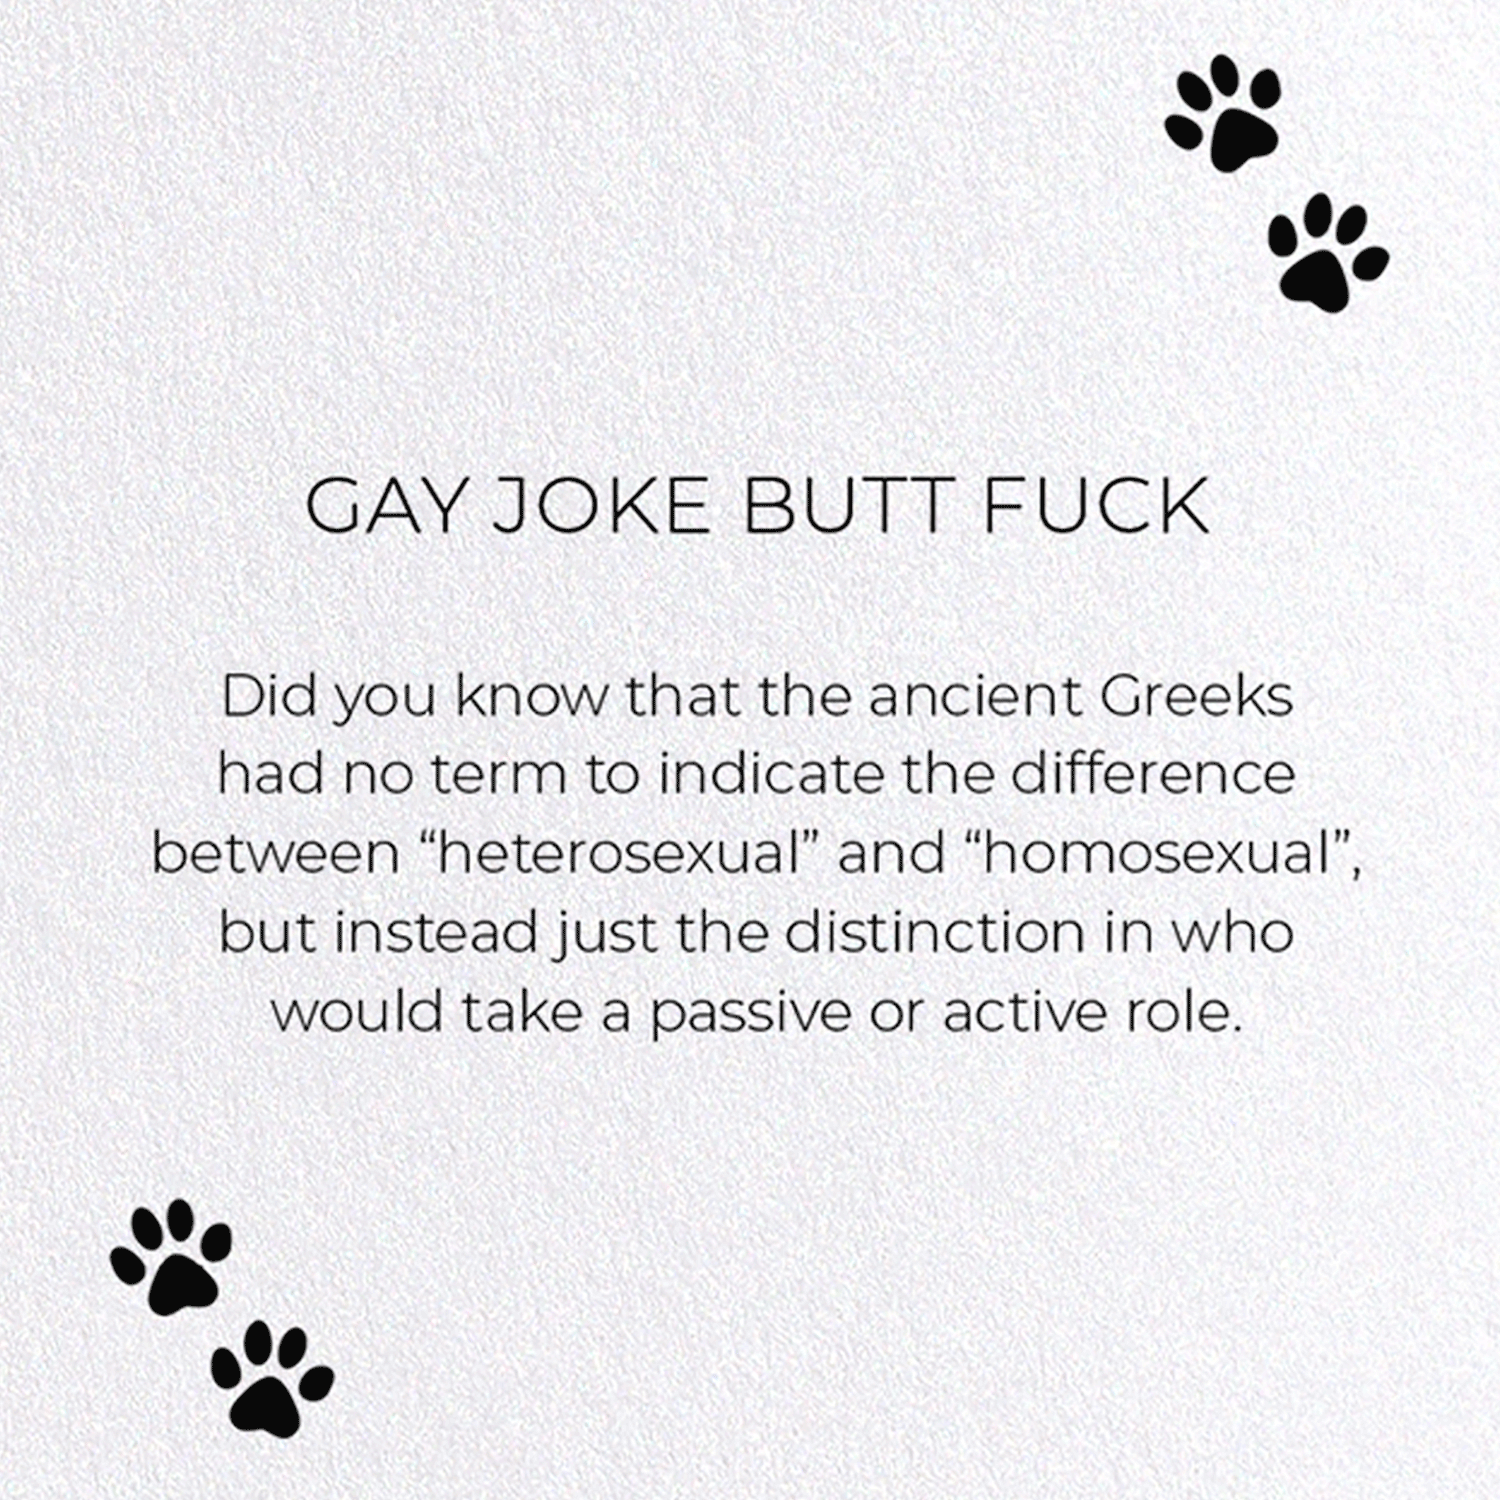 GAY JOKE BUTT FUCK: Funny Animal Greeting Card